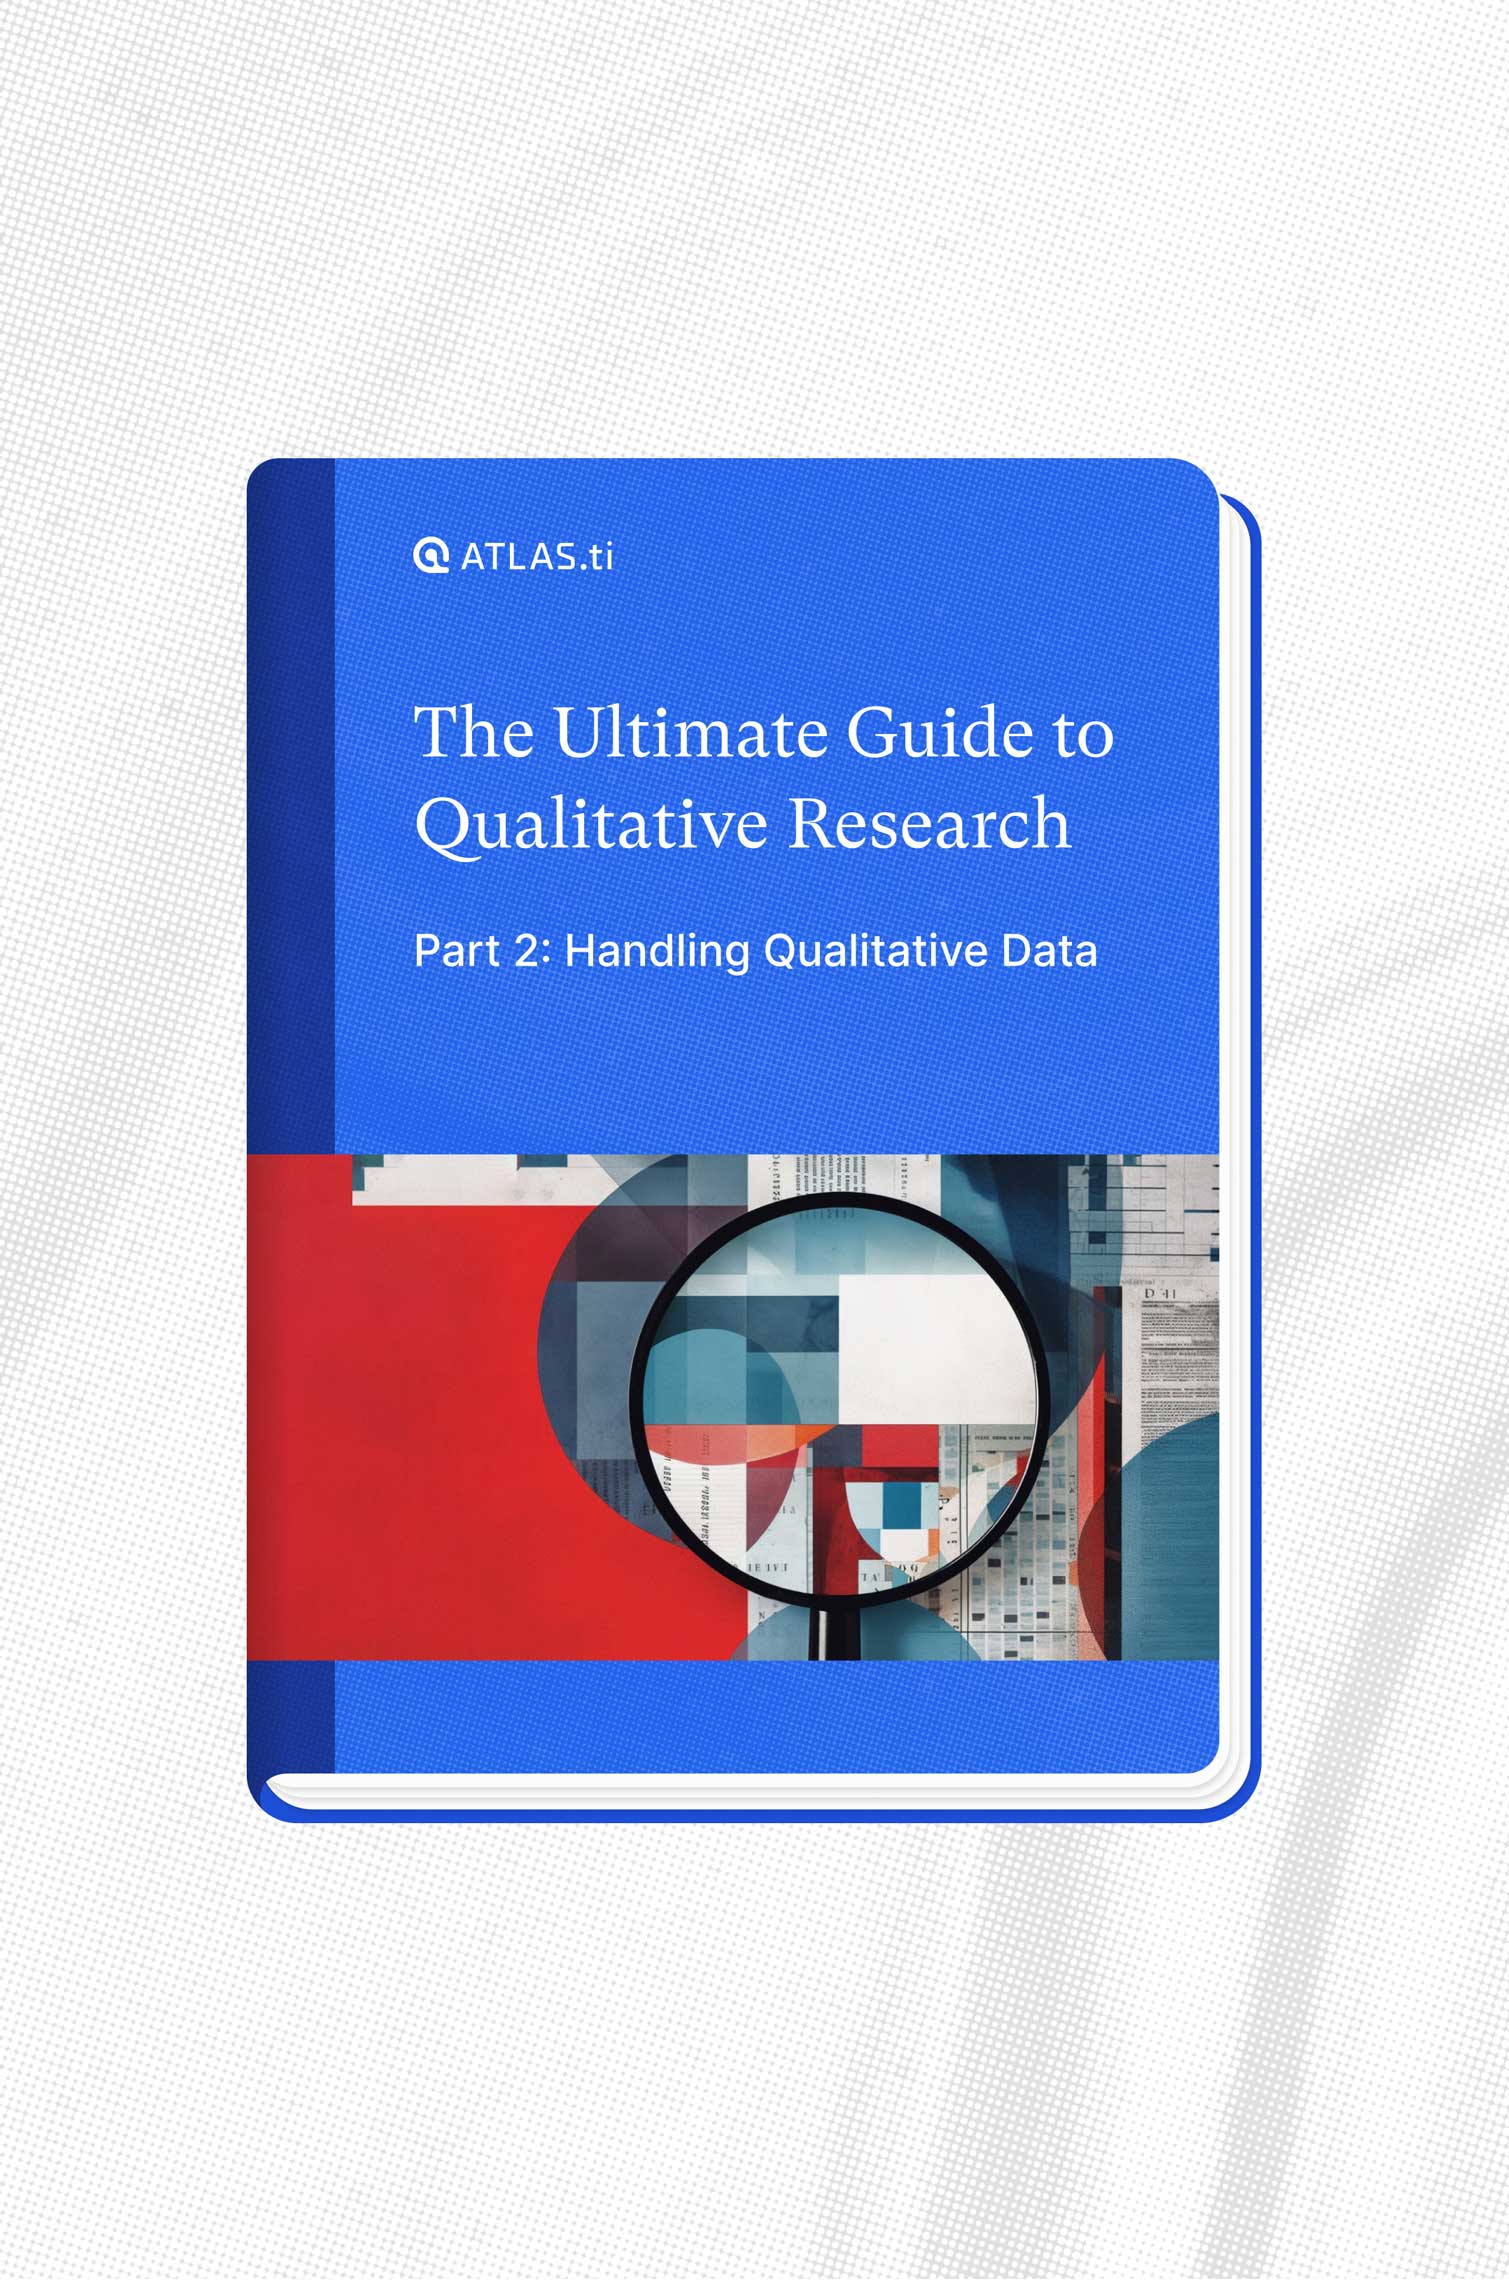 topics for research qualitative